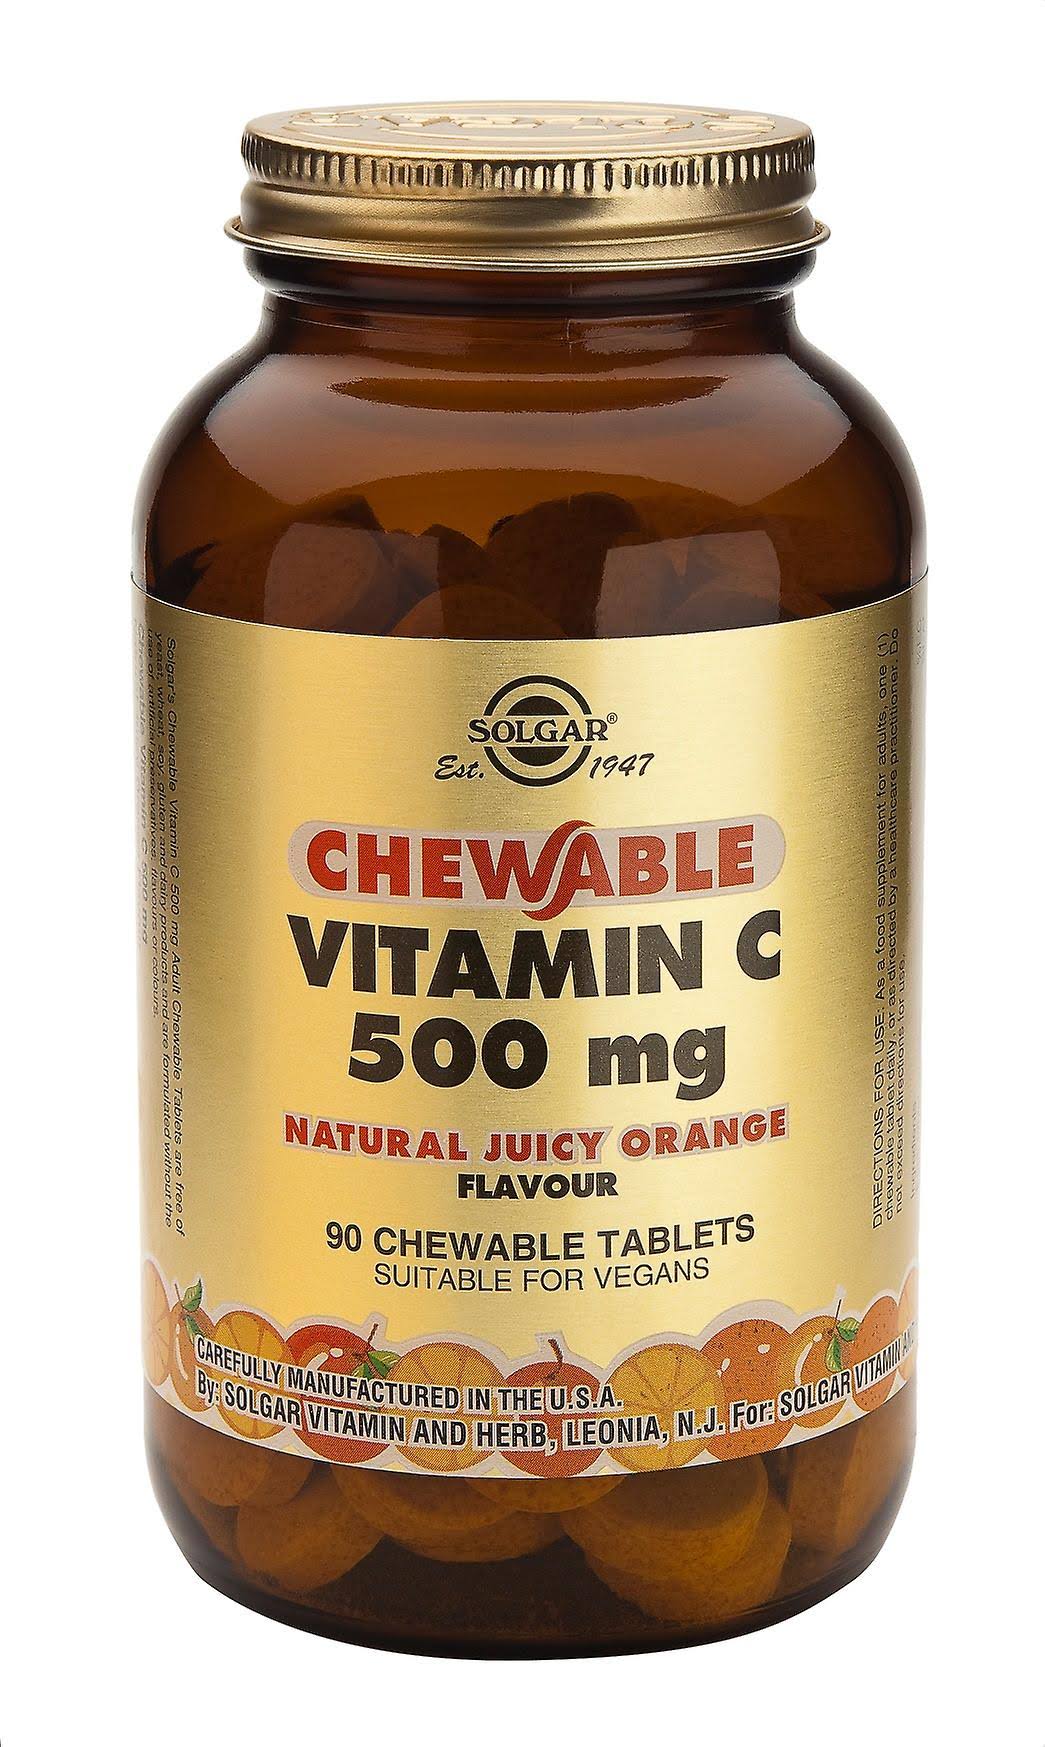 Solgar Chewable Vitamin C 500 Mg Natural - Juicy Orange Flavor, 90 Tablets